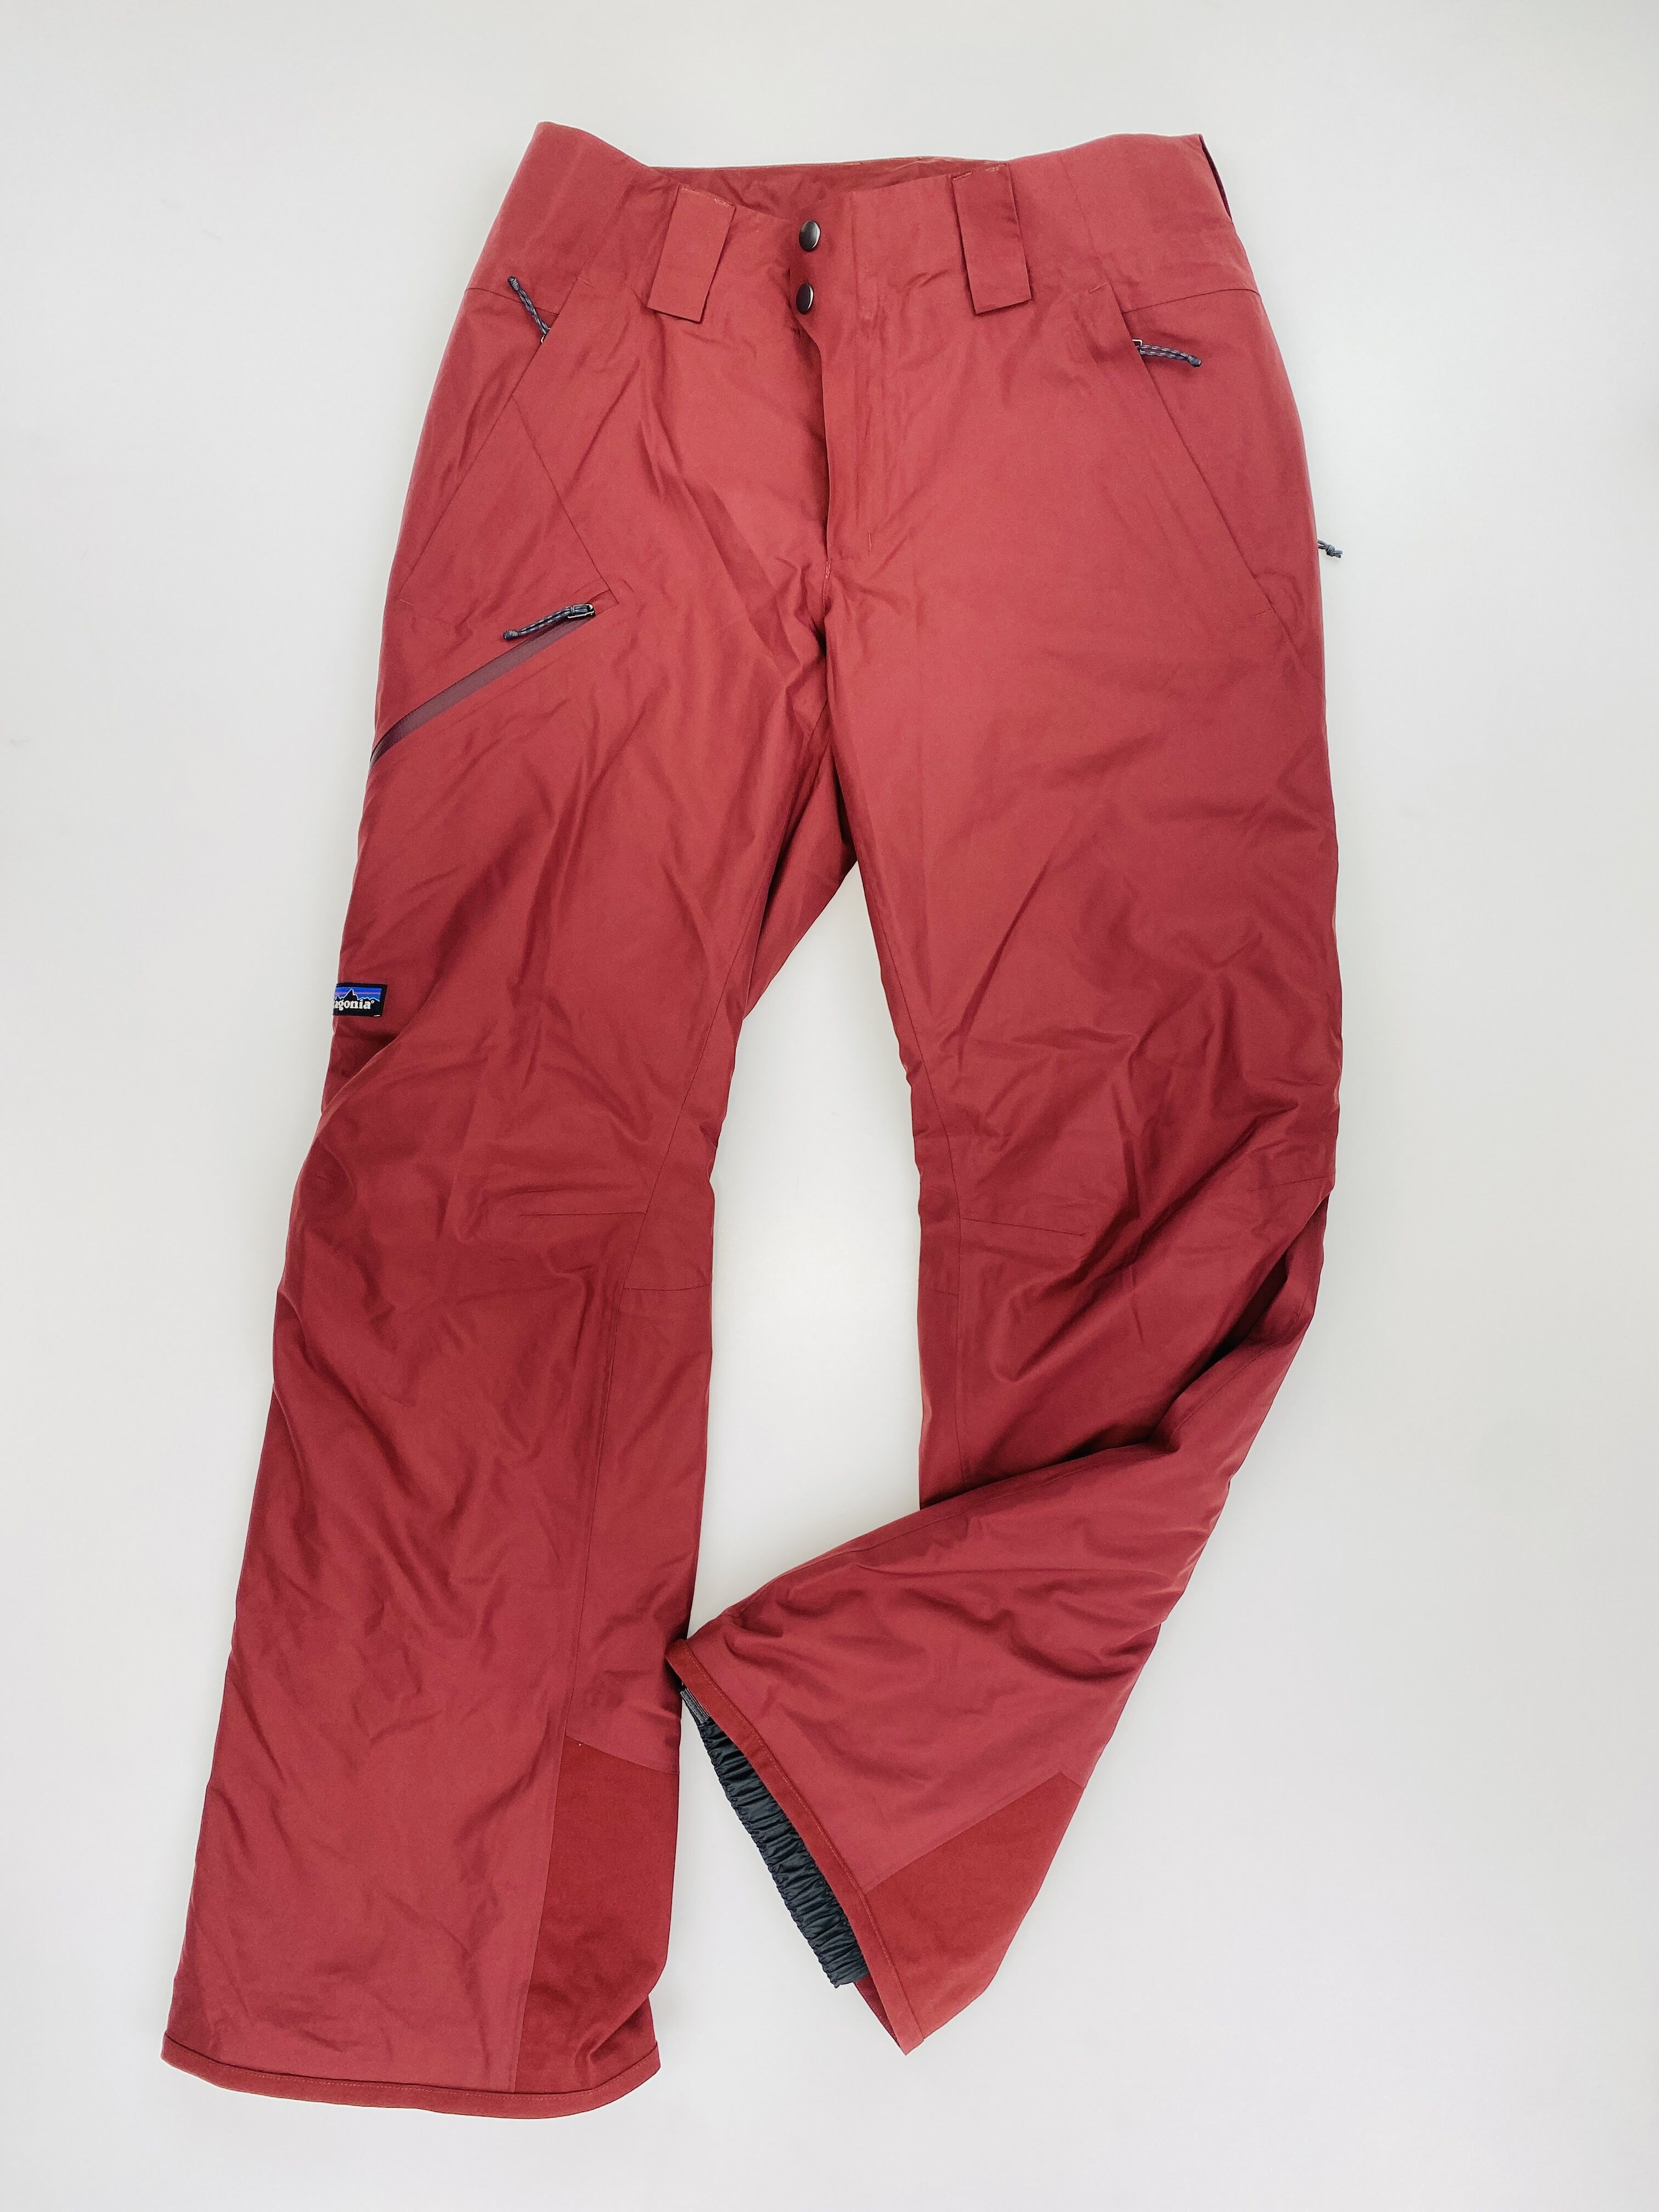 Patagonia W's Insulated Powder Town Pants - Reg - Second Hand Dámské lyžařské kalhoty - Červené - S | Hardloop